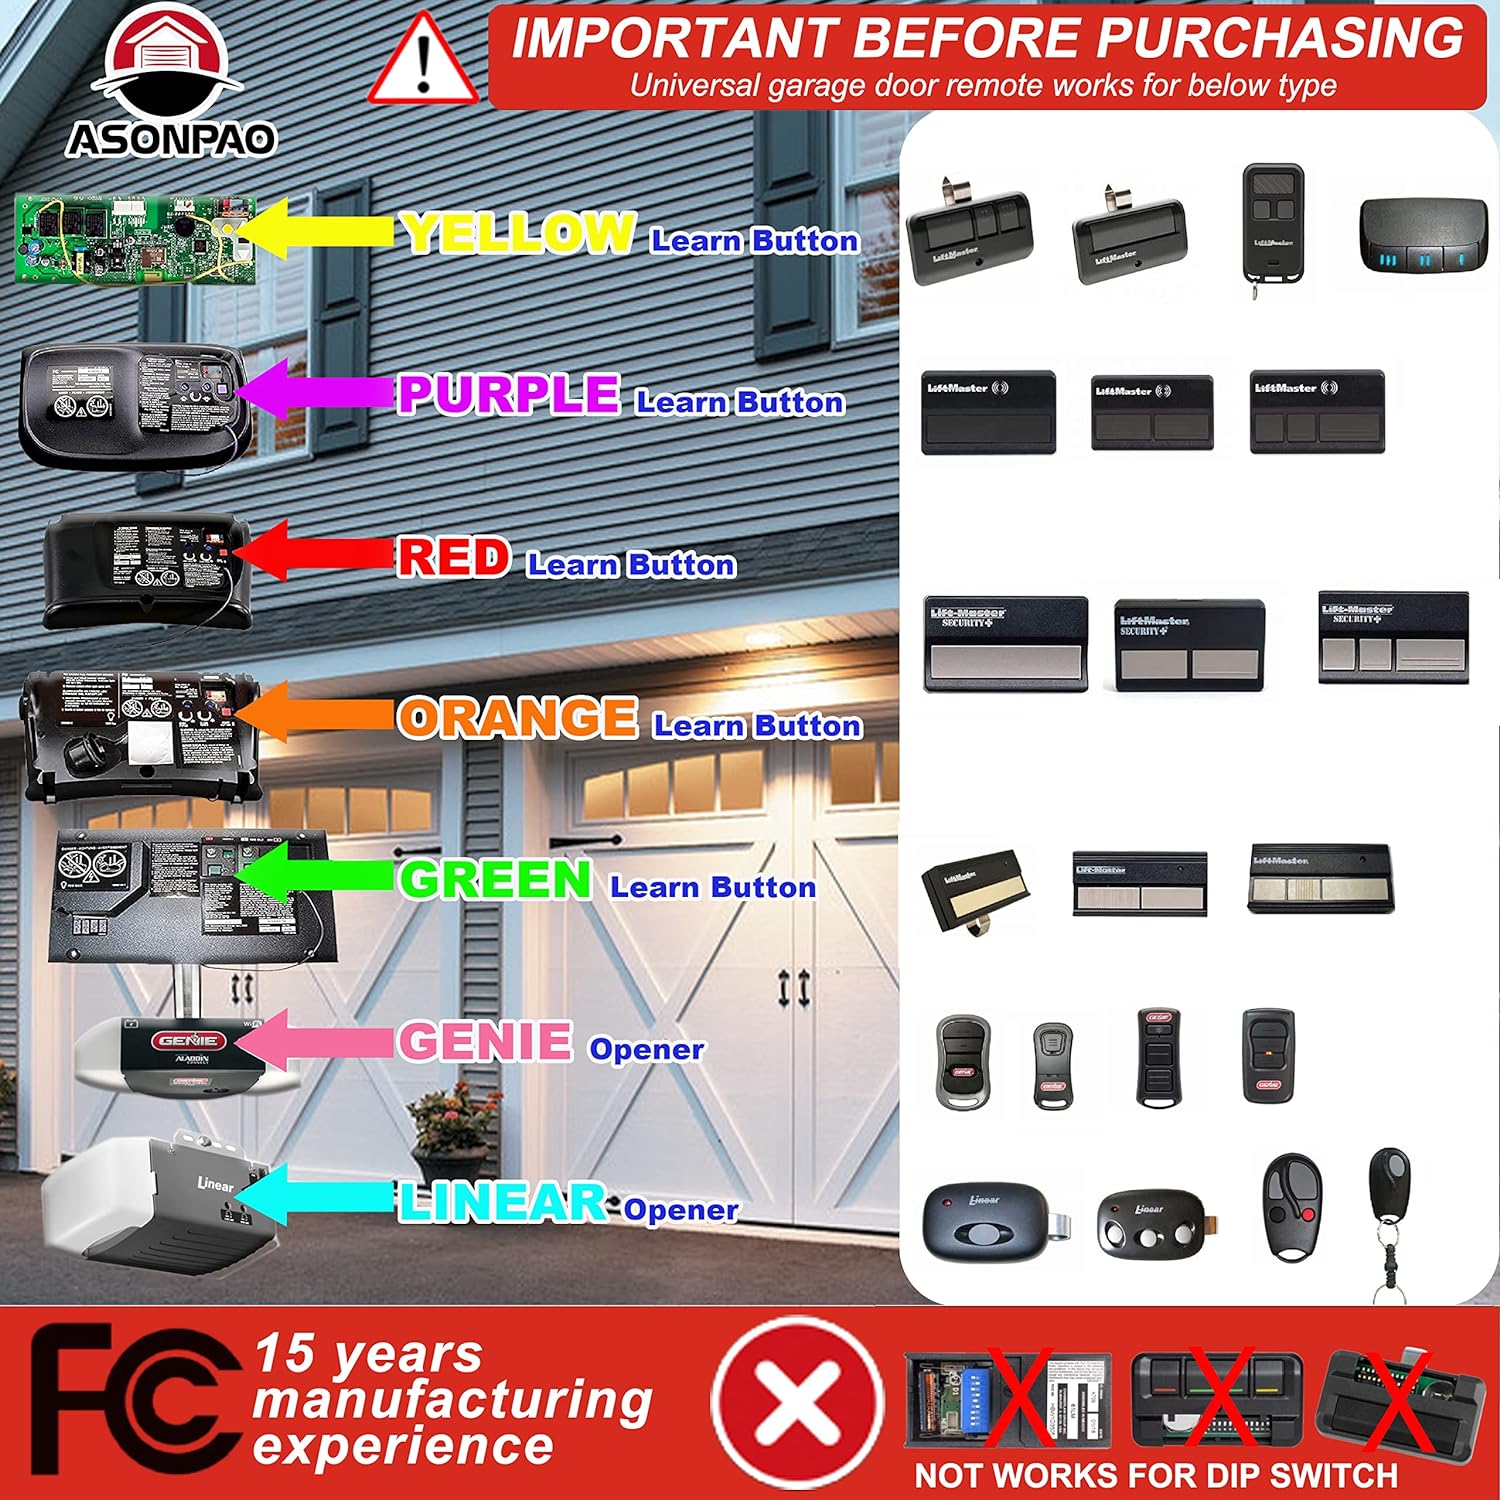 Alisontech ASONPAO 893MAX G953EV-P2 Universal Remote for Liftmaster/Chamberlain/Craftsman/Genie/Linear Garage Door Openers(2Pack)